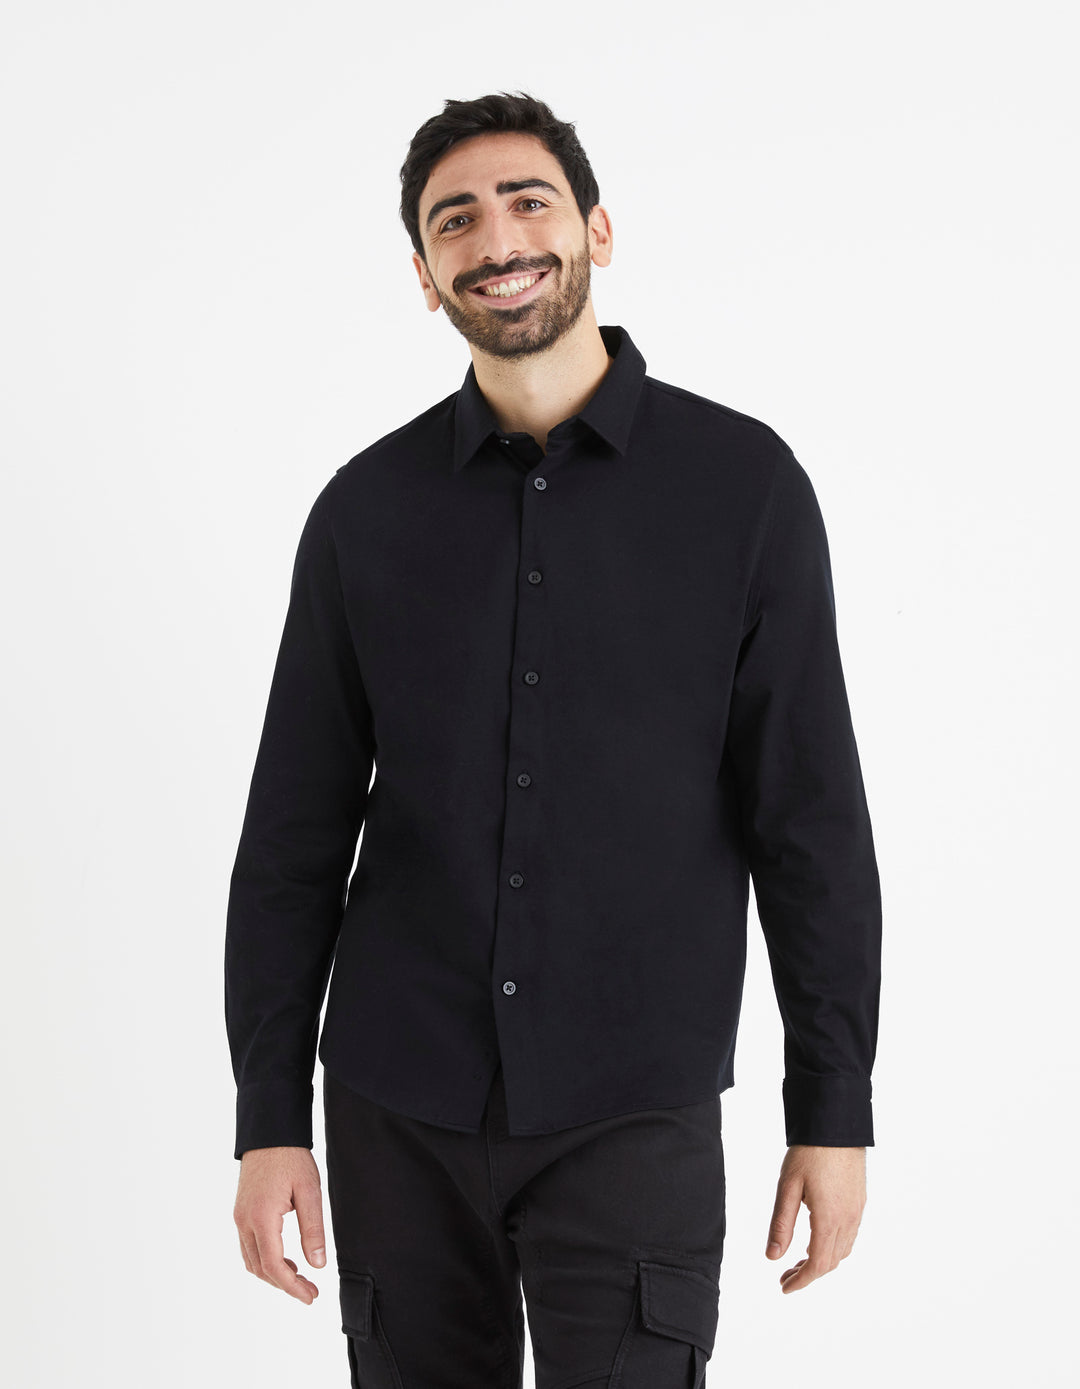 Men - knitted - Shirt - Long sleeves